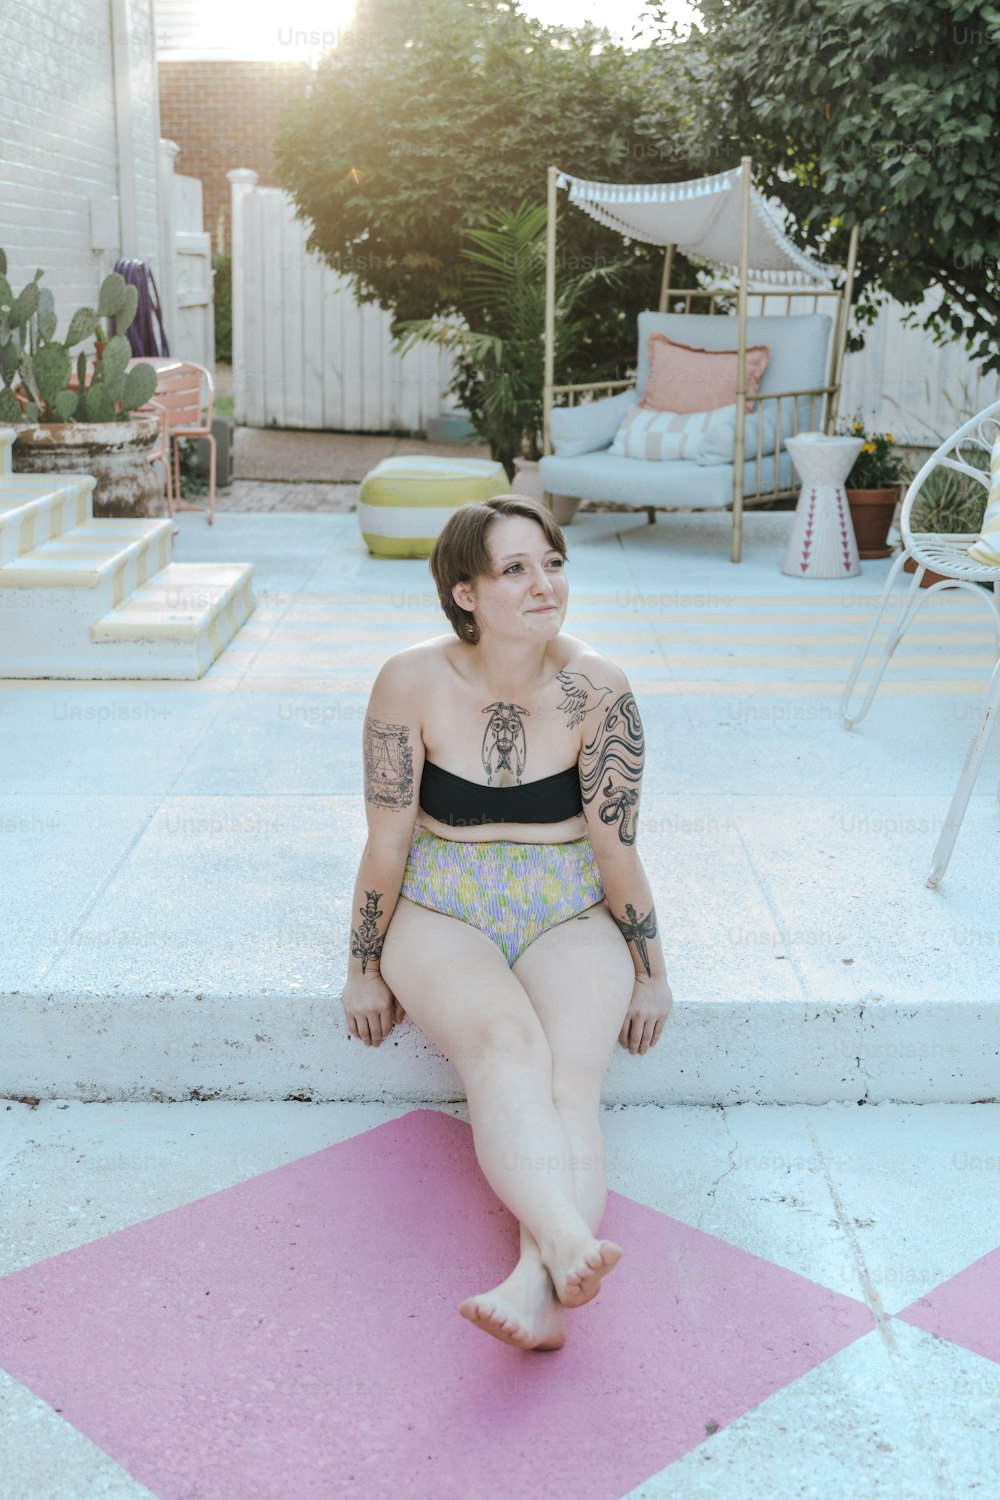 a woman in a bikini sitting on the ground